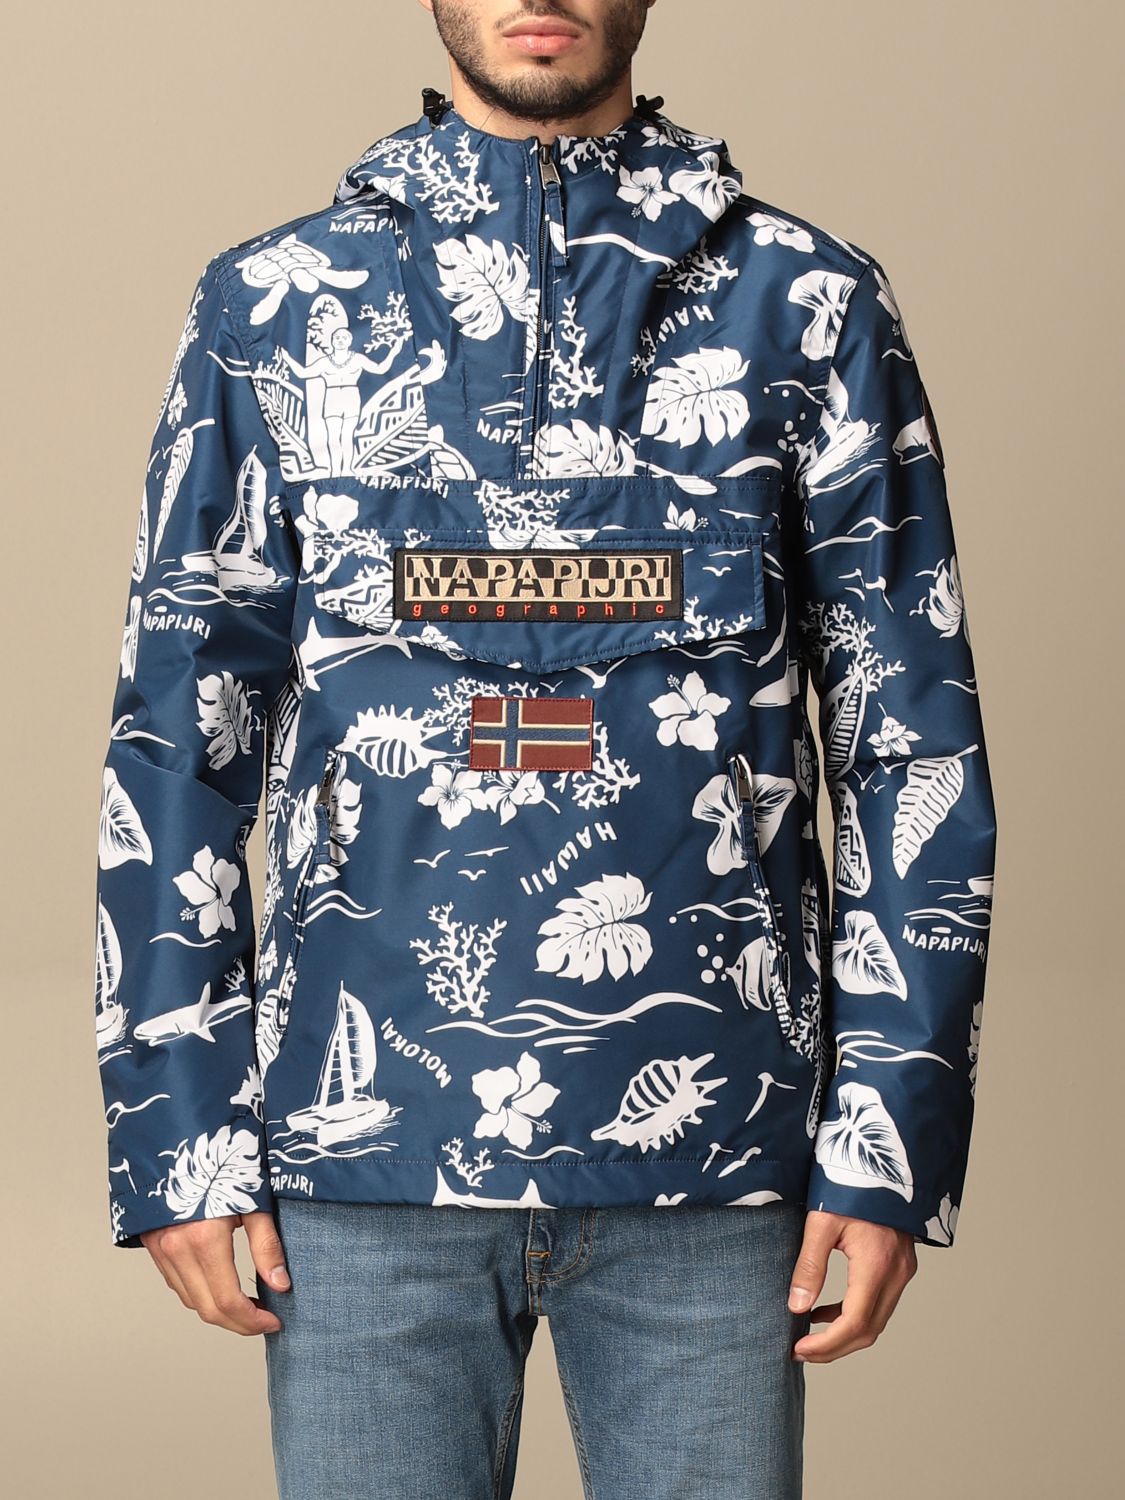 Napapijri Outlet: Rainforest s jacket with Hawaii print | Napapijri jacket NP0A4FDL online on GIGLIO.COM